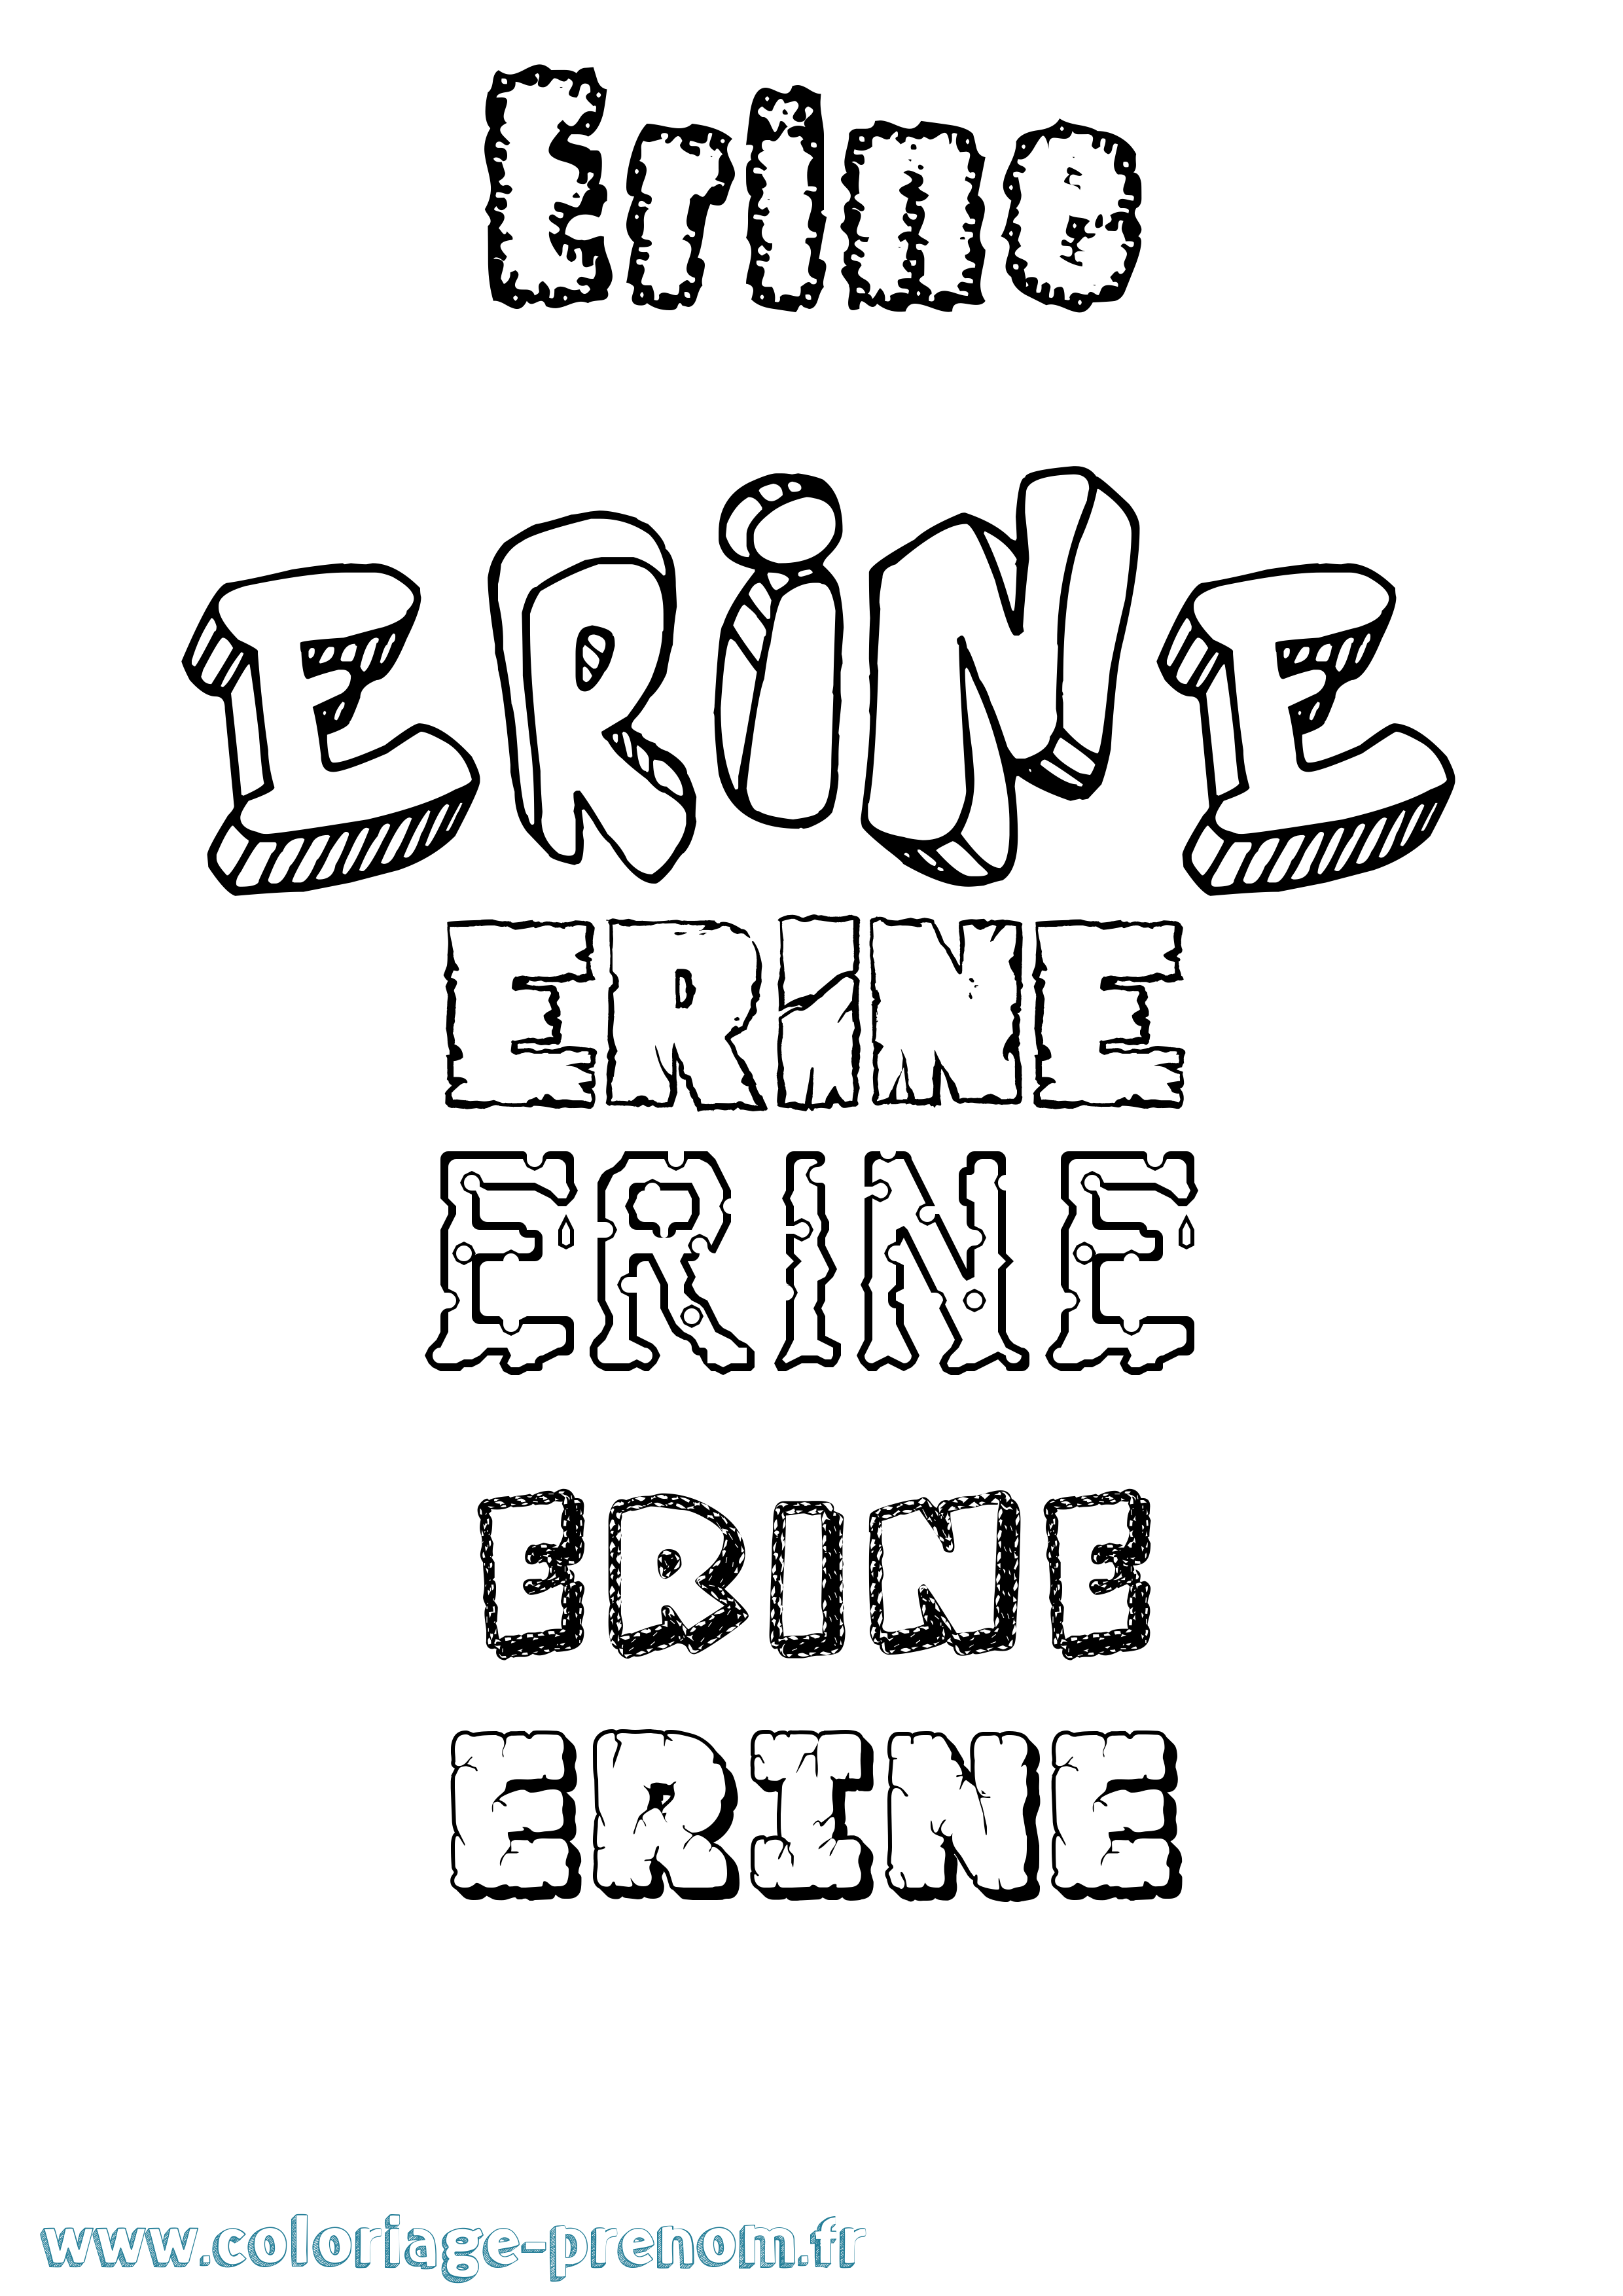 Coloriage prénom Erine